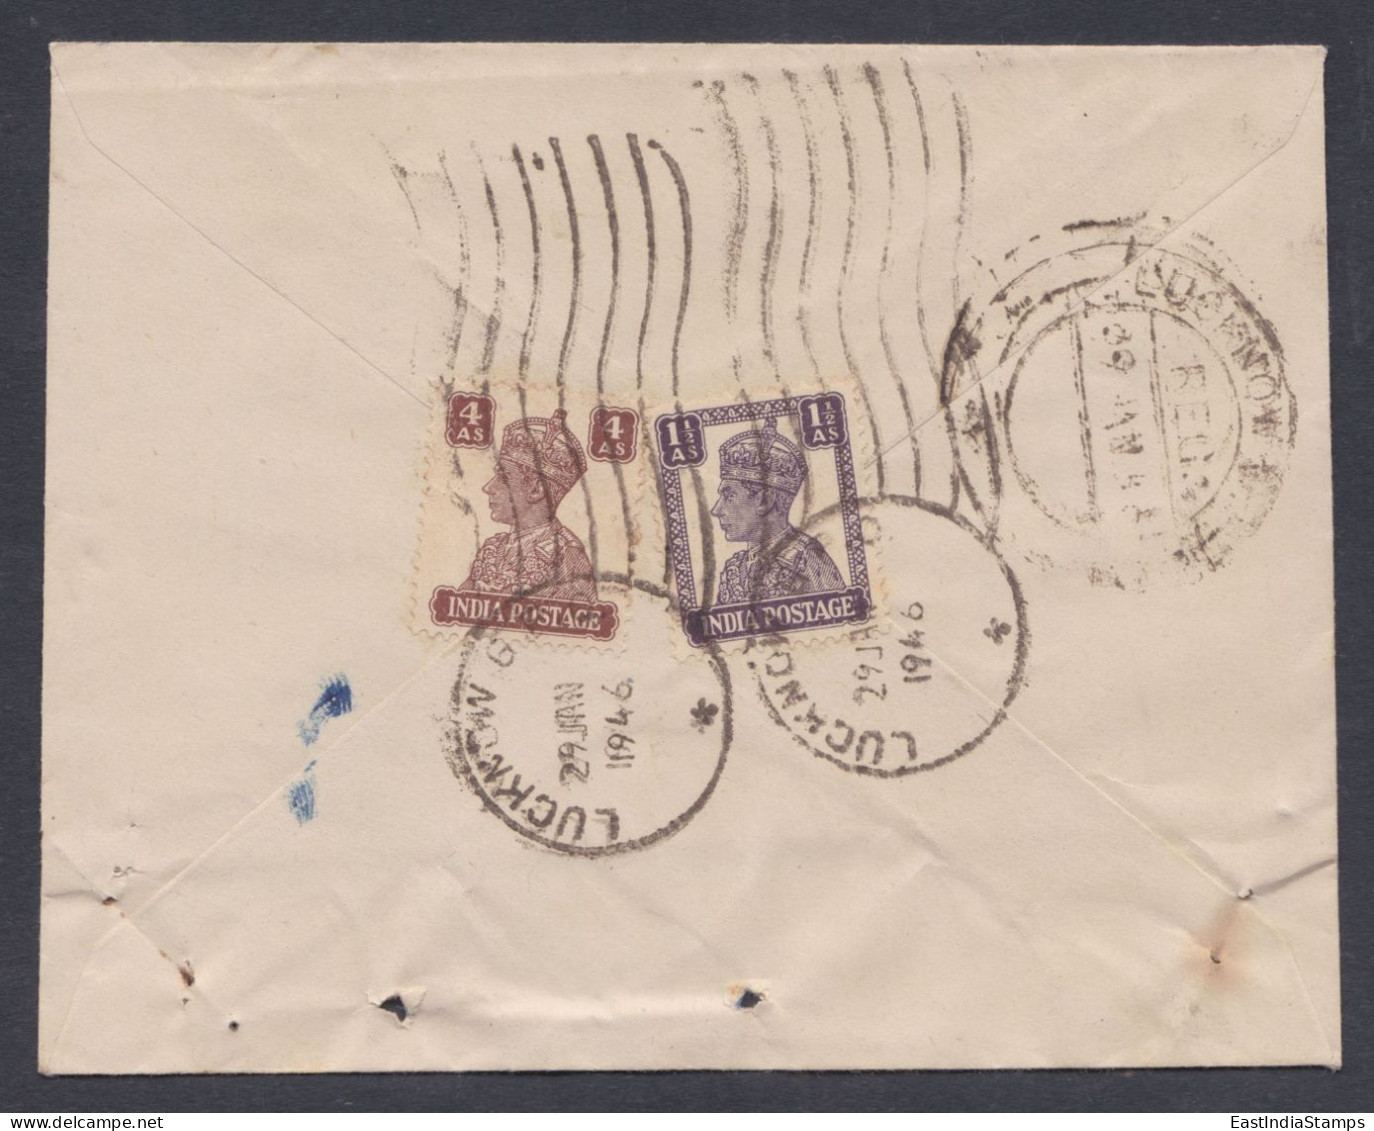 Inde British India 1946 Used Registered Cover, Lucknow, Refused, Return Mail, King George VI Stamps - 1911-35 King George V